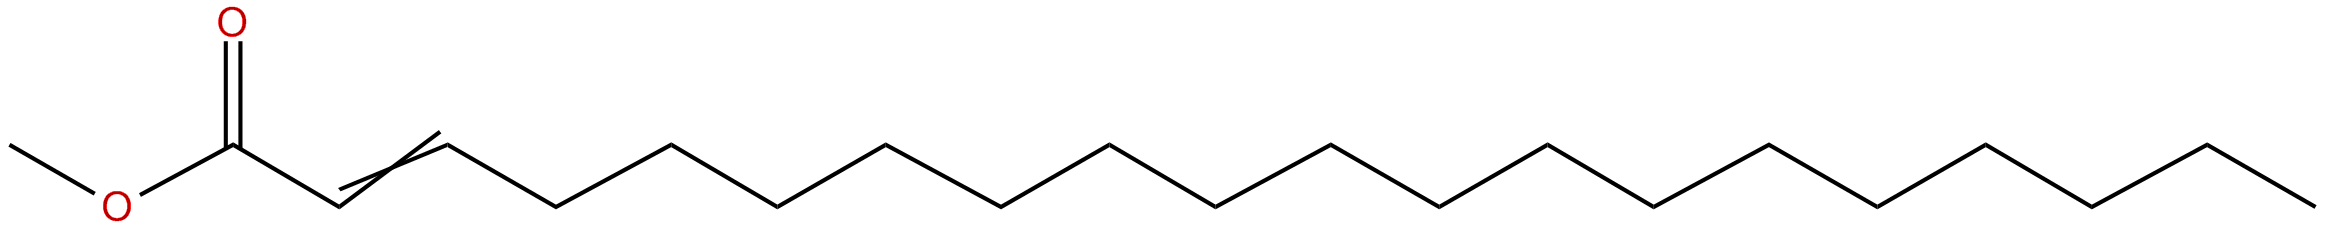 Image of methyl eicosenoate